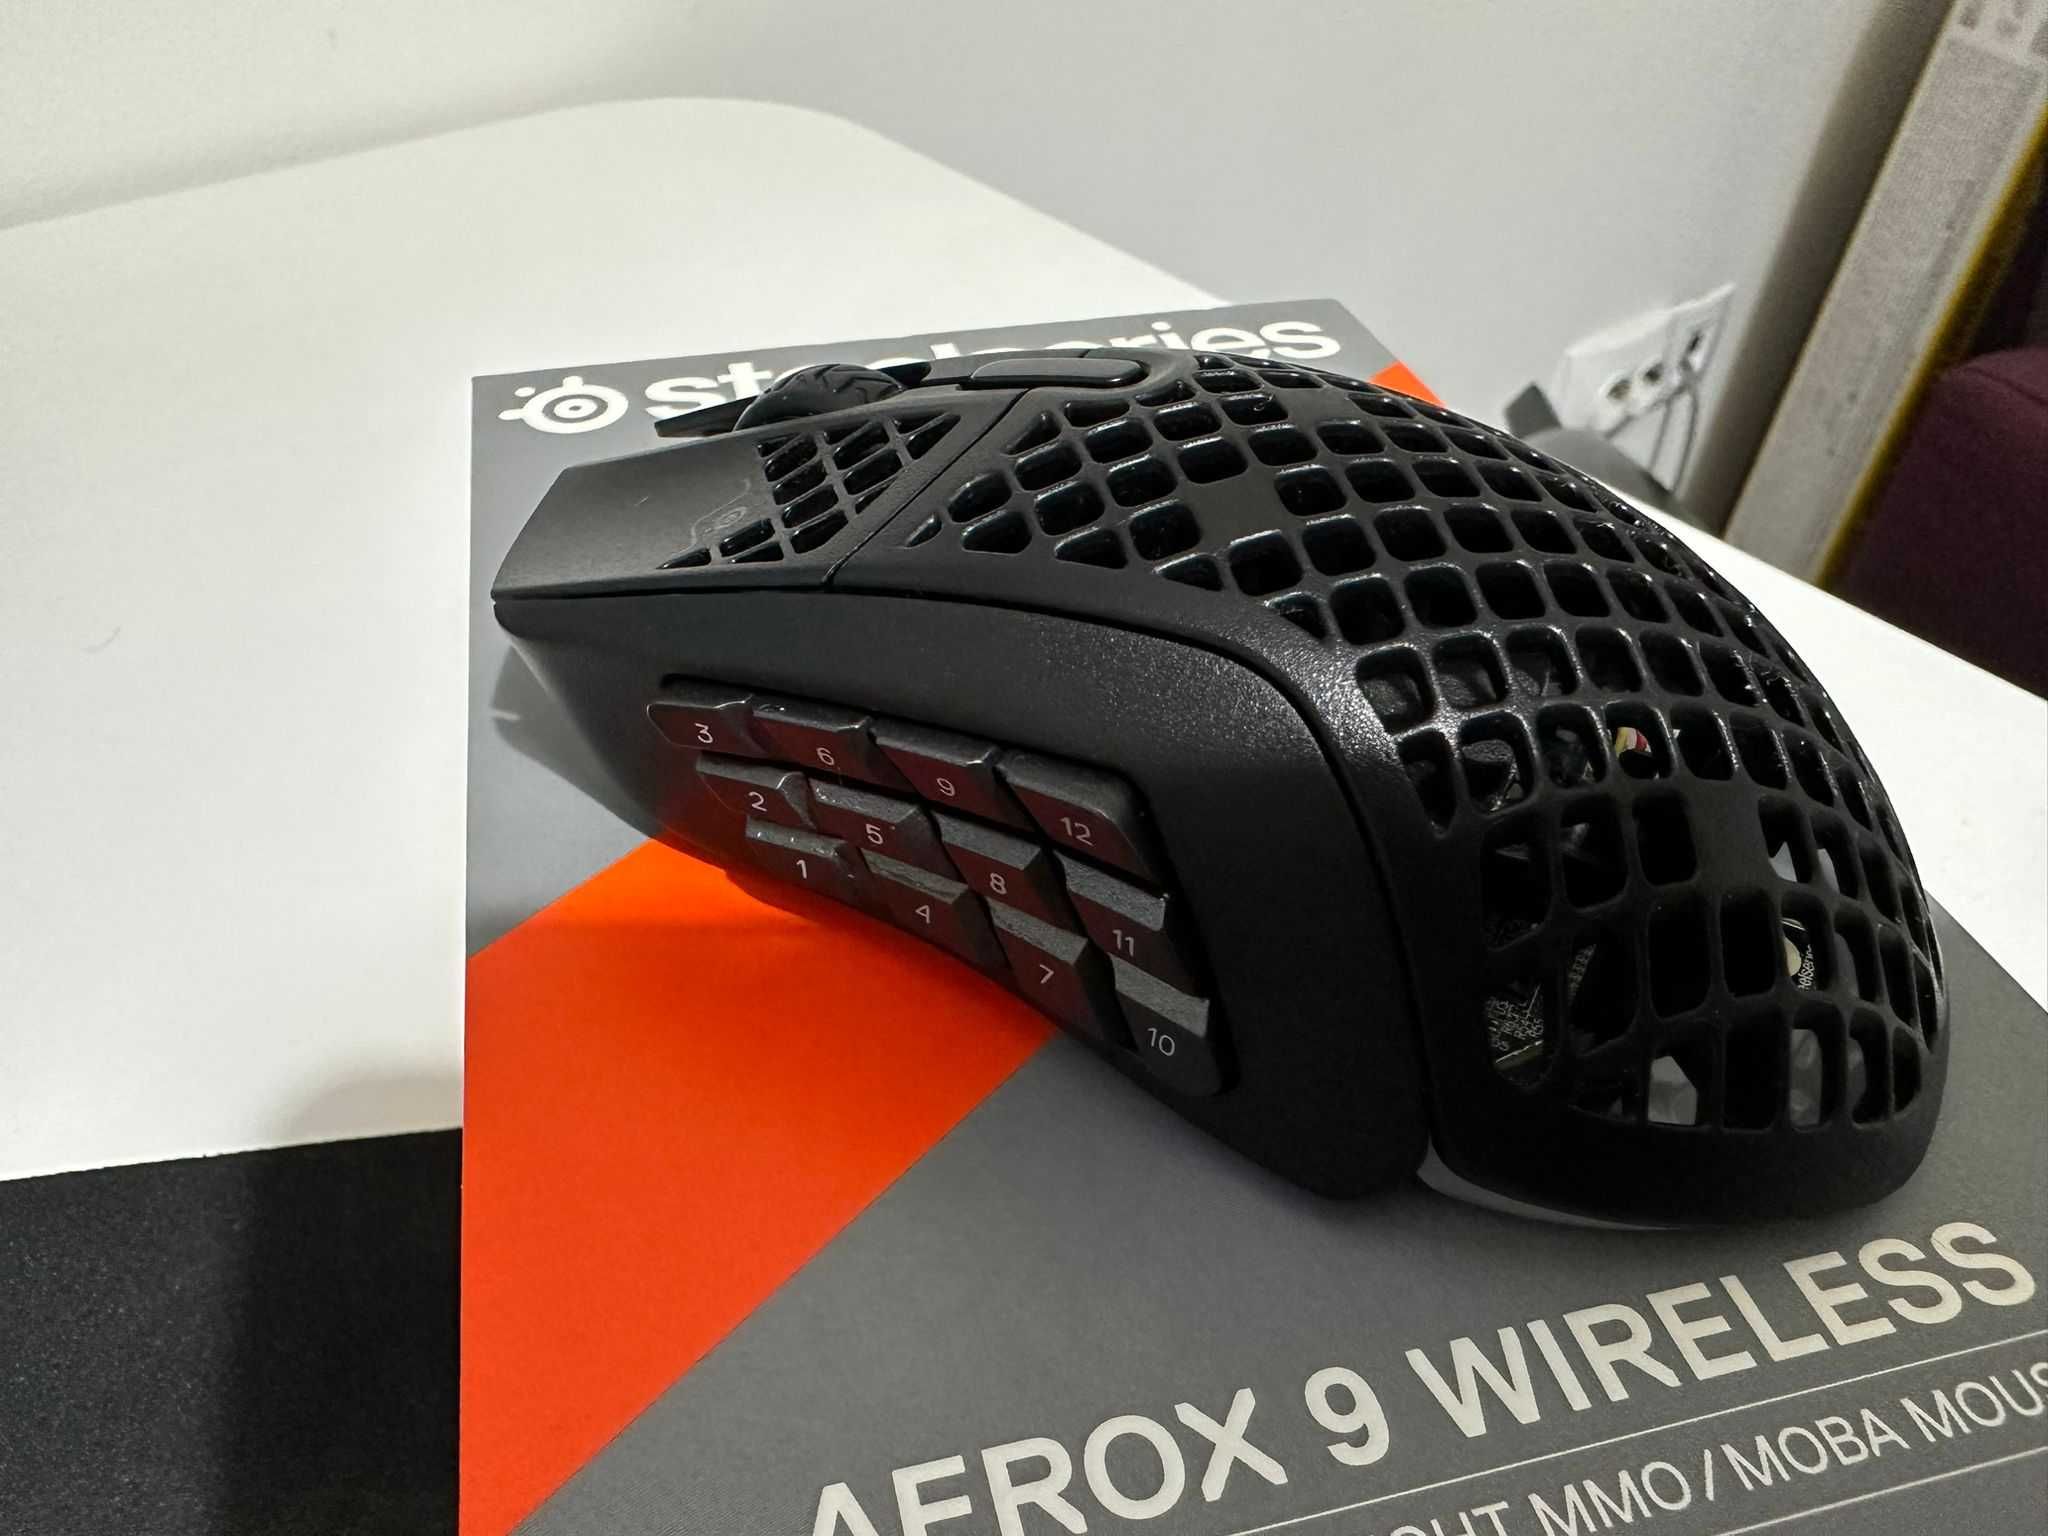 STEELSERIES Aerox 9 Wireless negru - NOU best lightweight mouse.